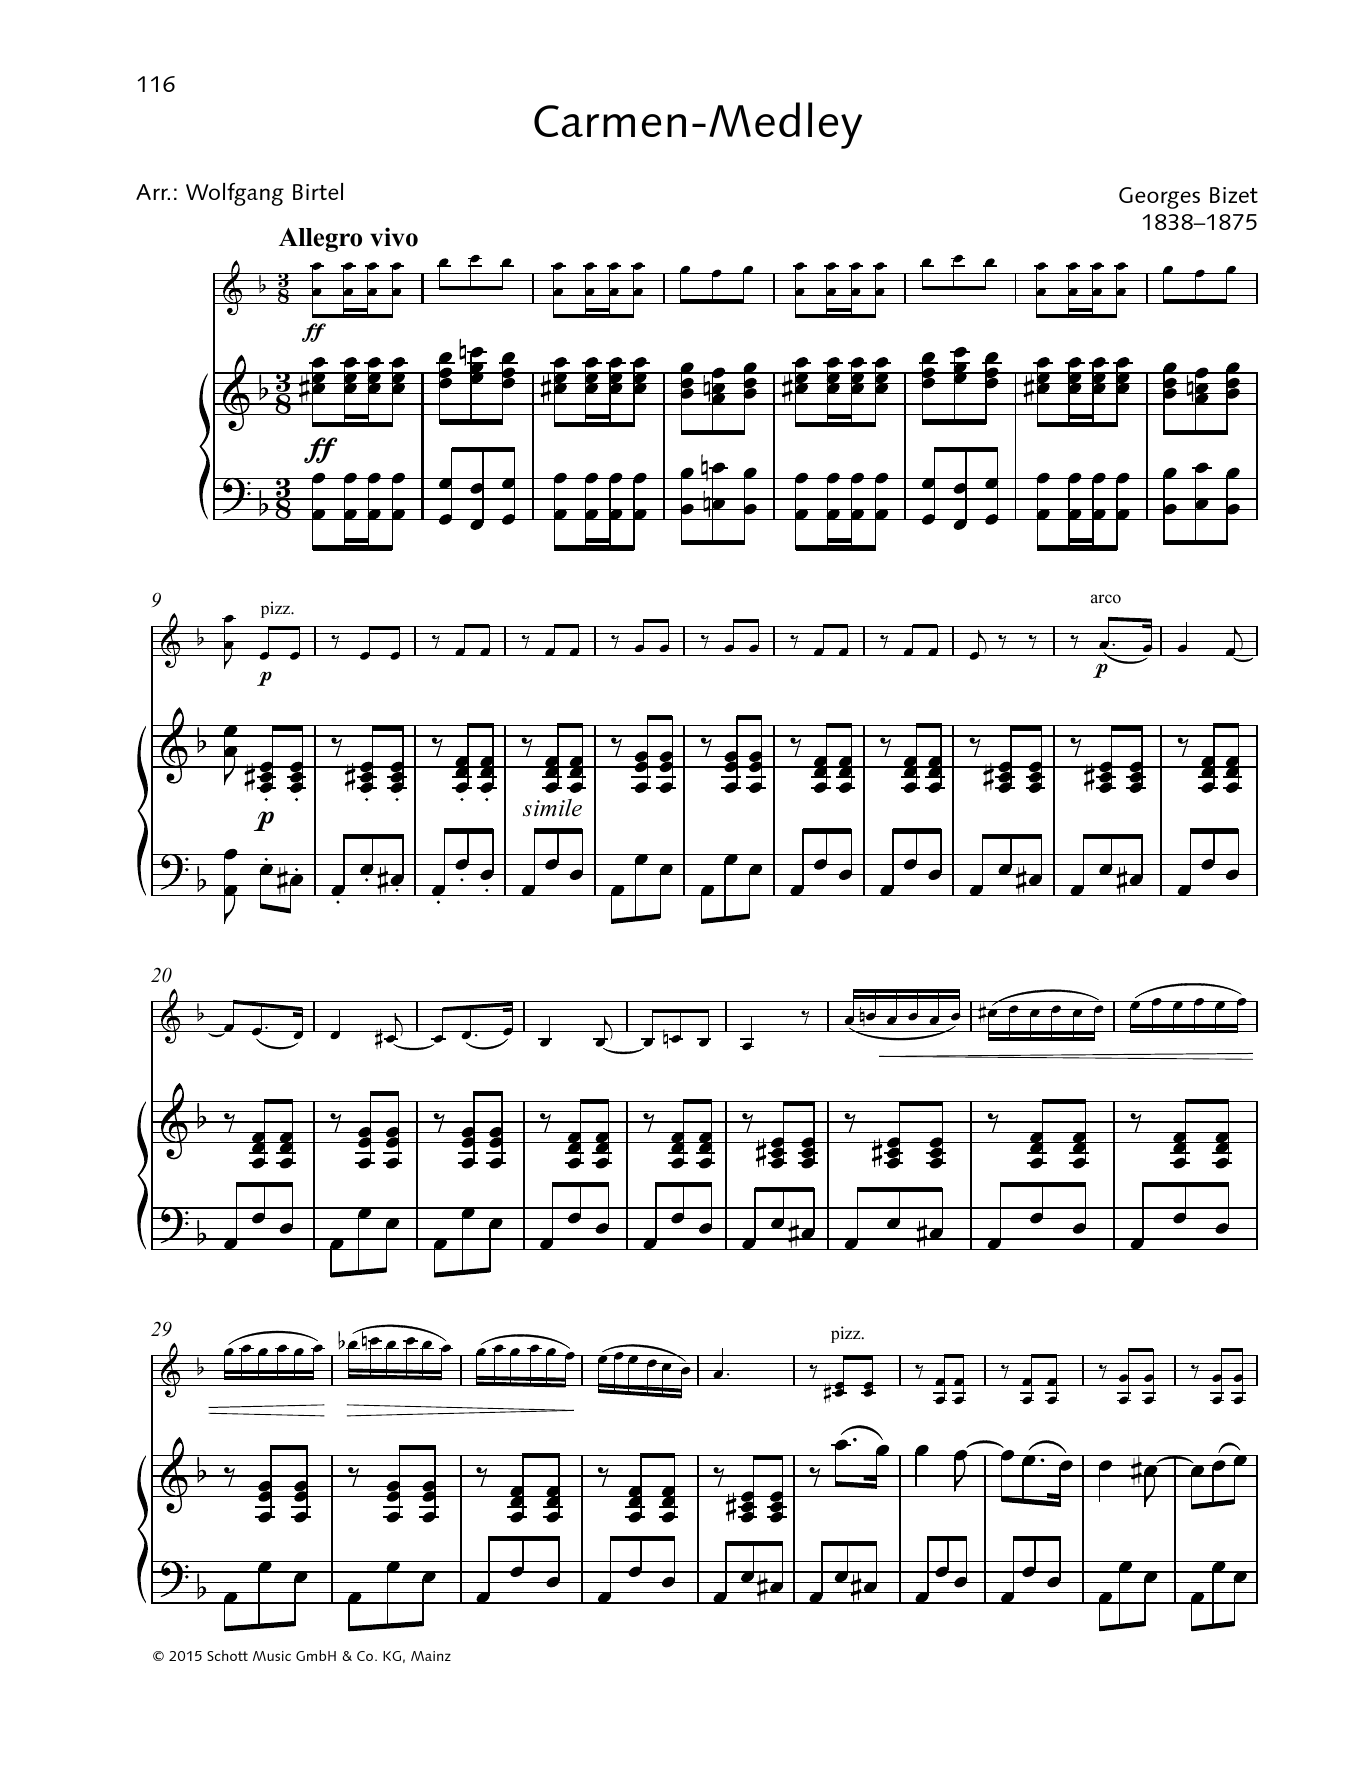 Download Georges Bizet Carmen-Medley Sheet Music